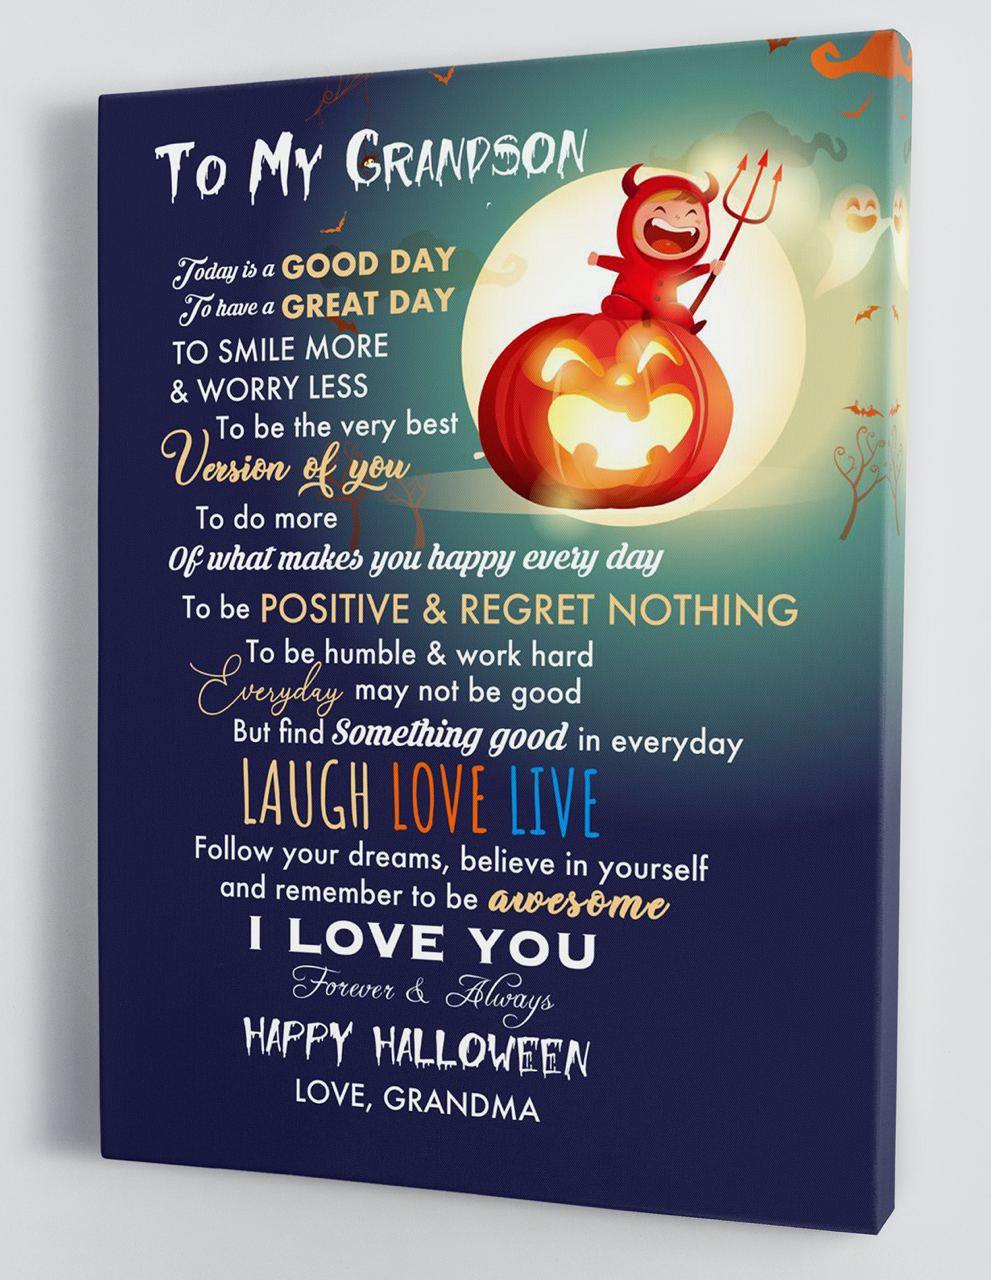 To My Grandson - From Grandma - Halloween Canvas Gift GMS056 - DivesArt LLC